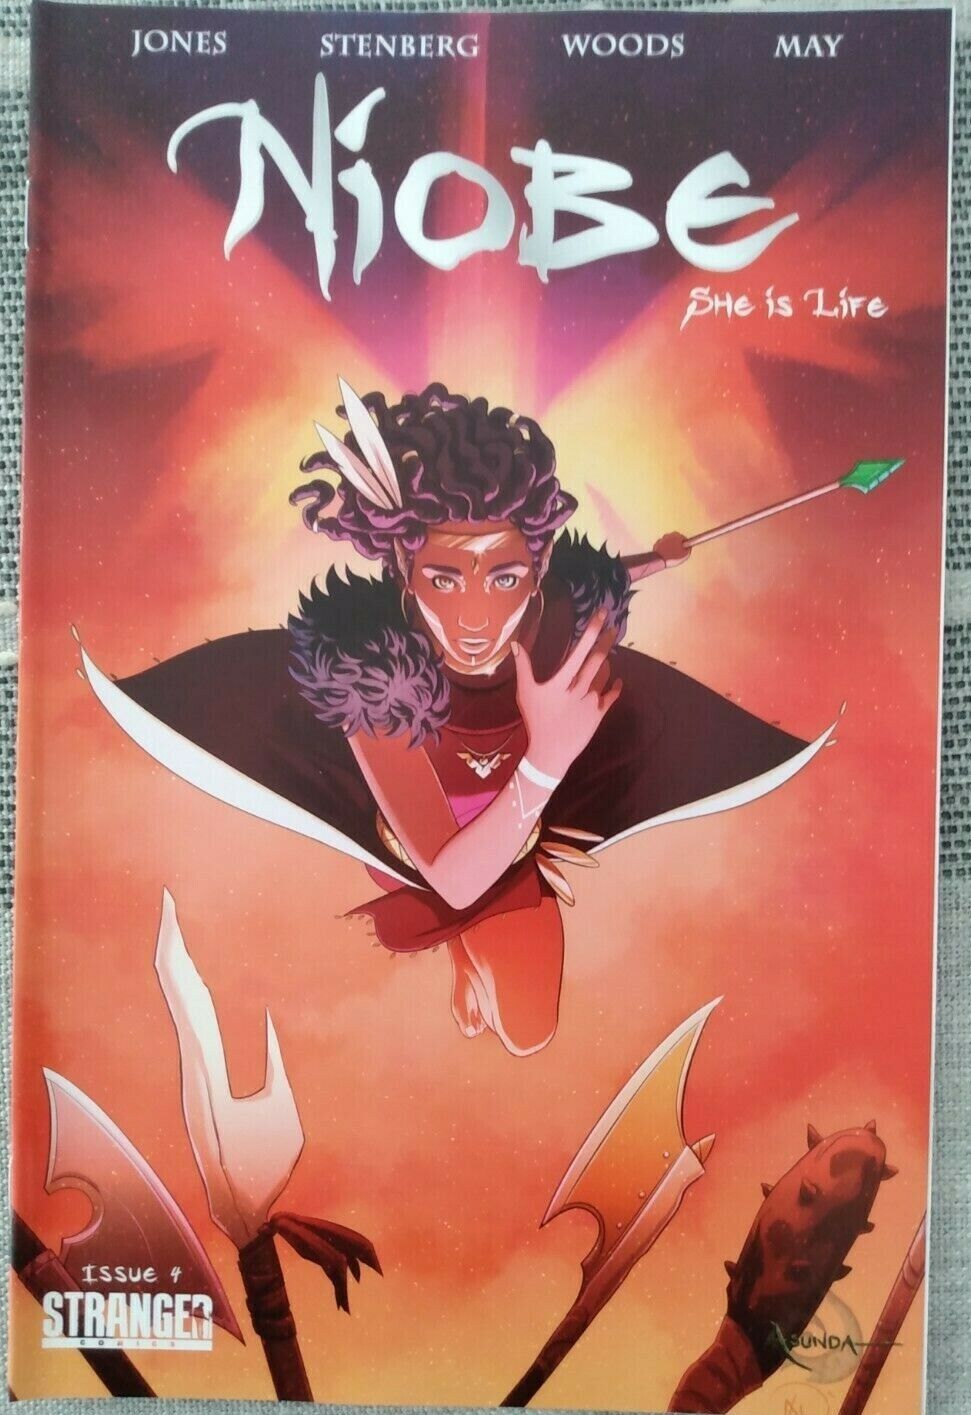 Niobe She is Life #4 Stranger Comics 2016 Comic Book HBO